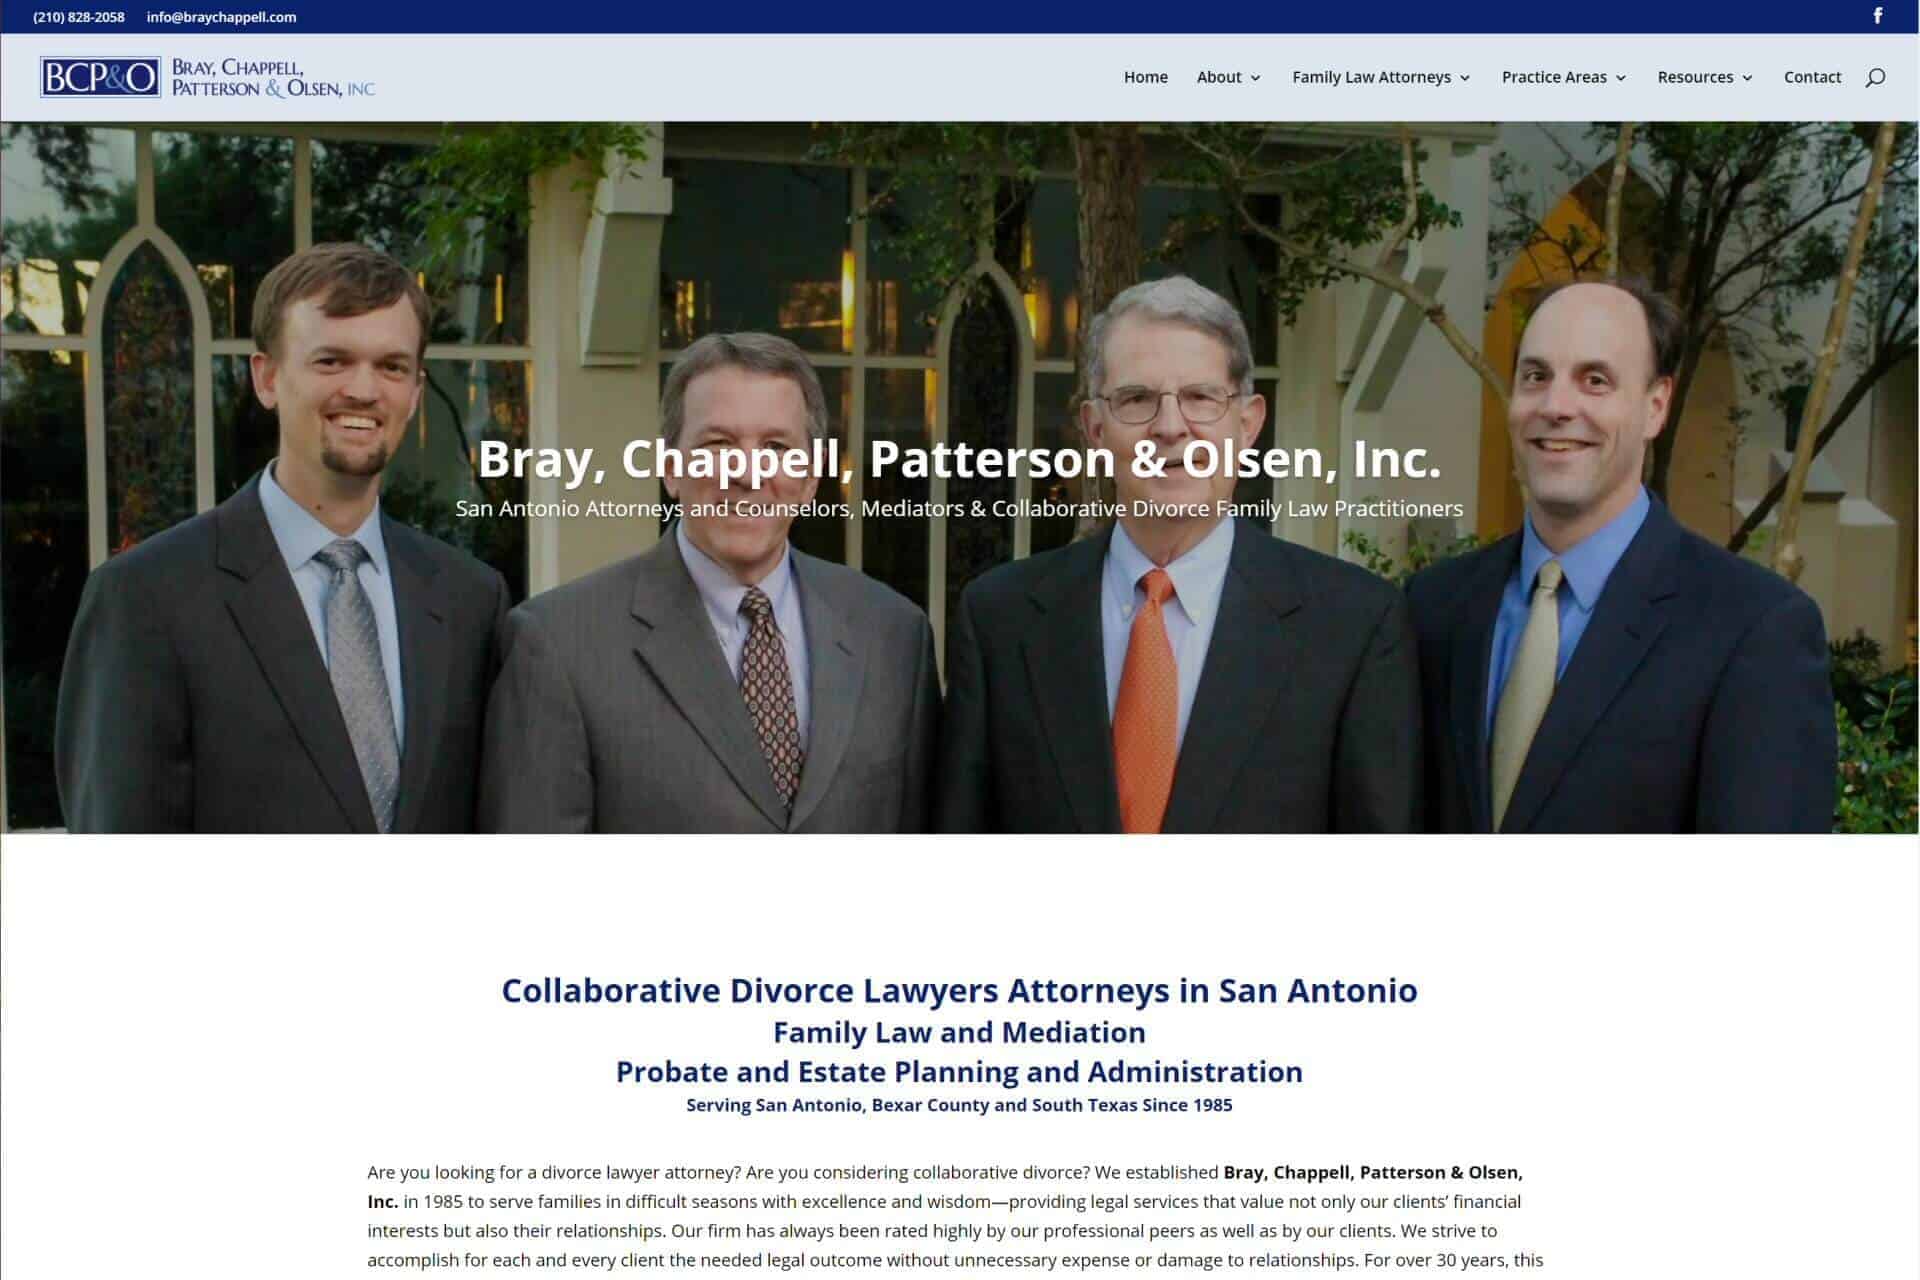 Bray, Chappell, Patterson & Olsen, Inc. by John Largen & Associates